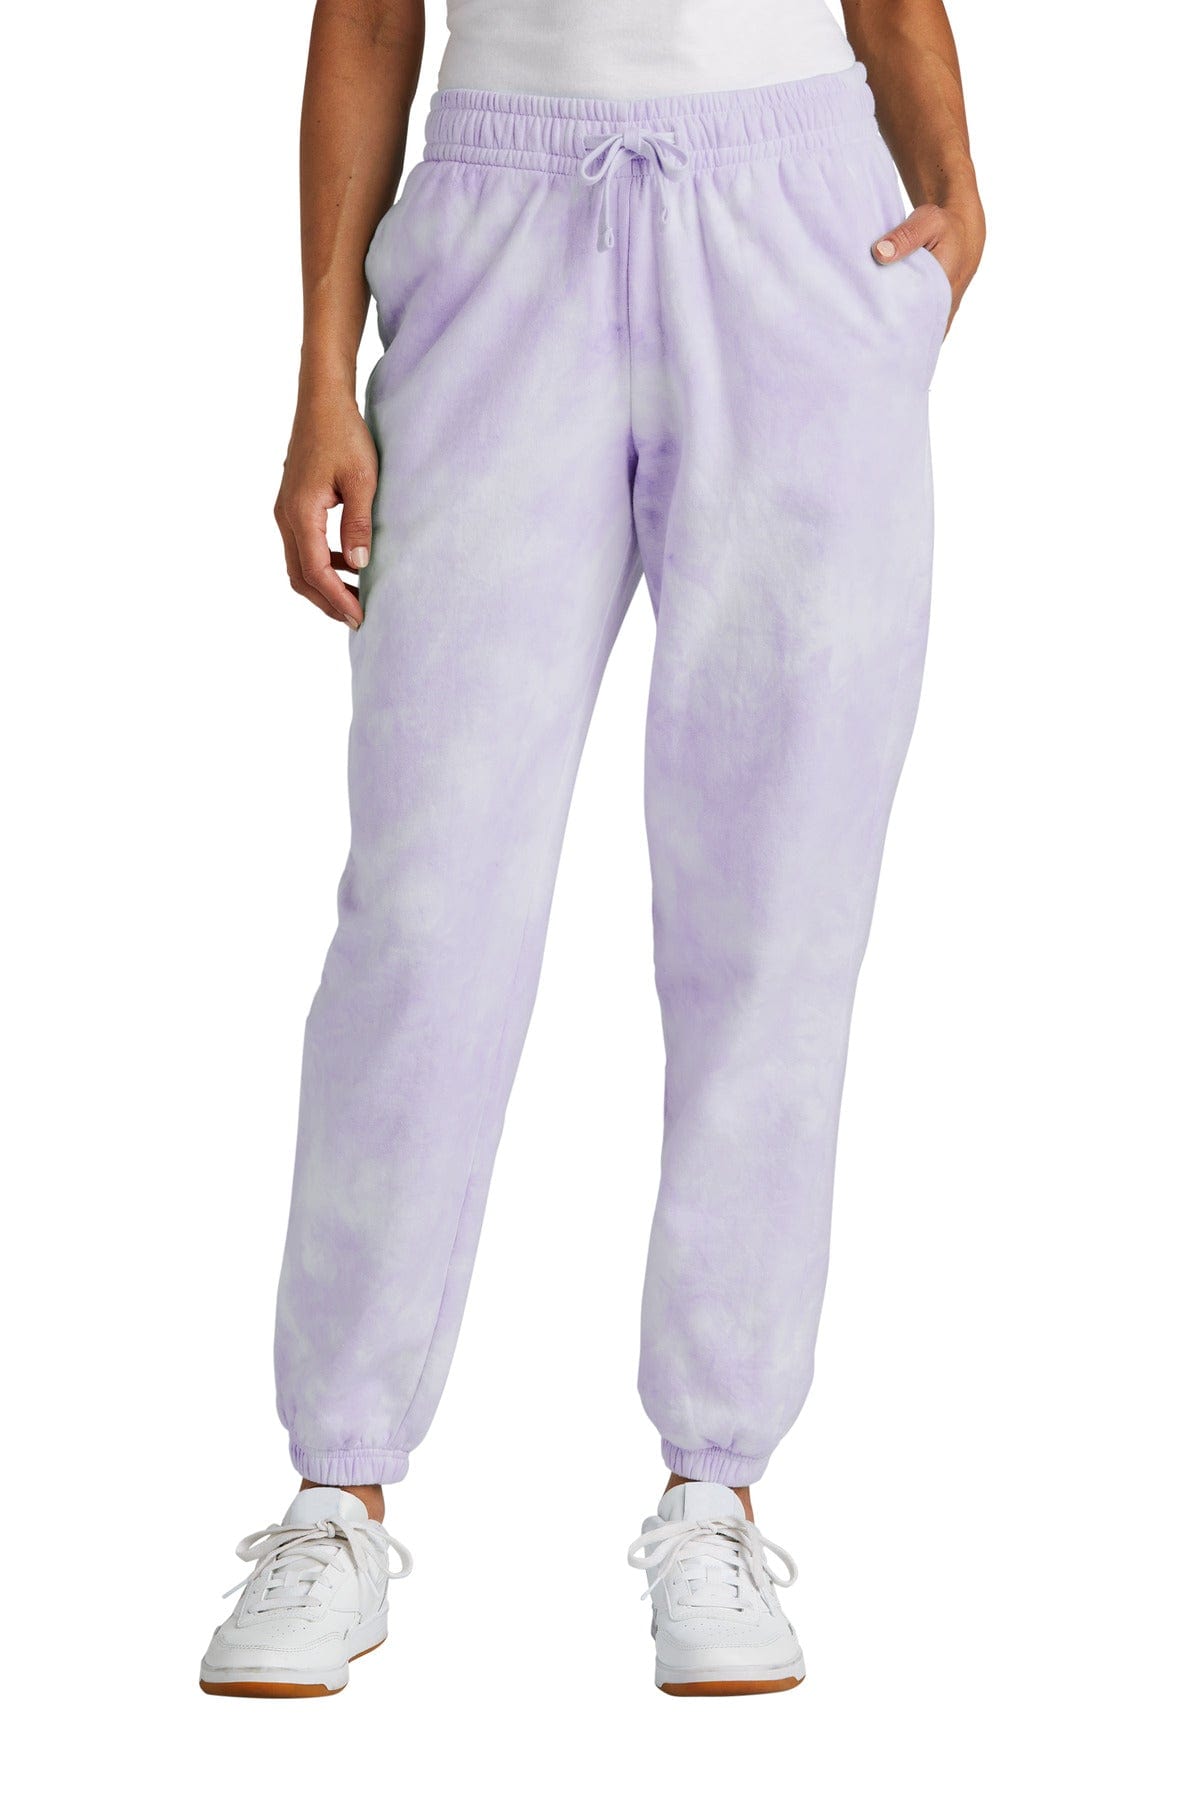 Port & Company ® Ladies Beach Wash ® Cloud Tie-Dye Sweatpant LPC140P